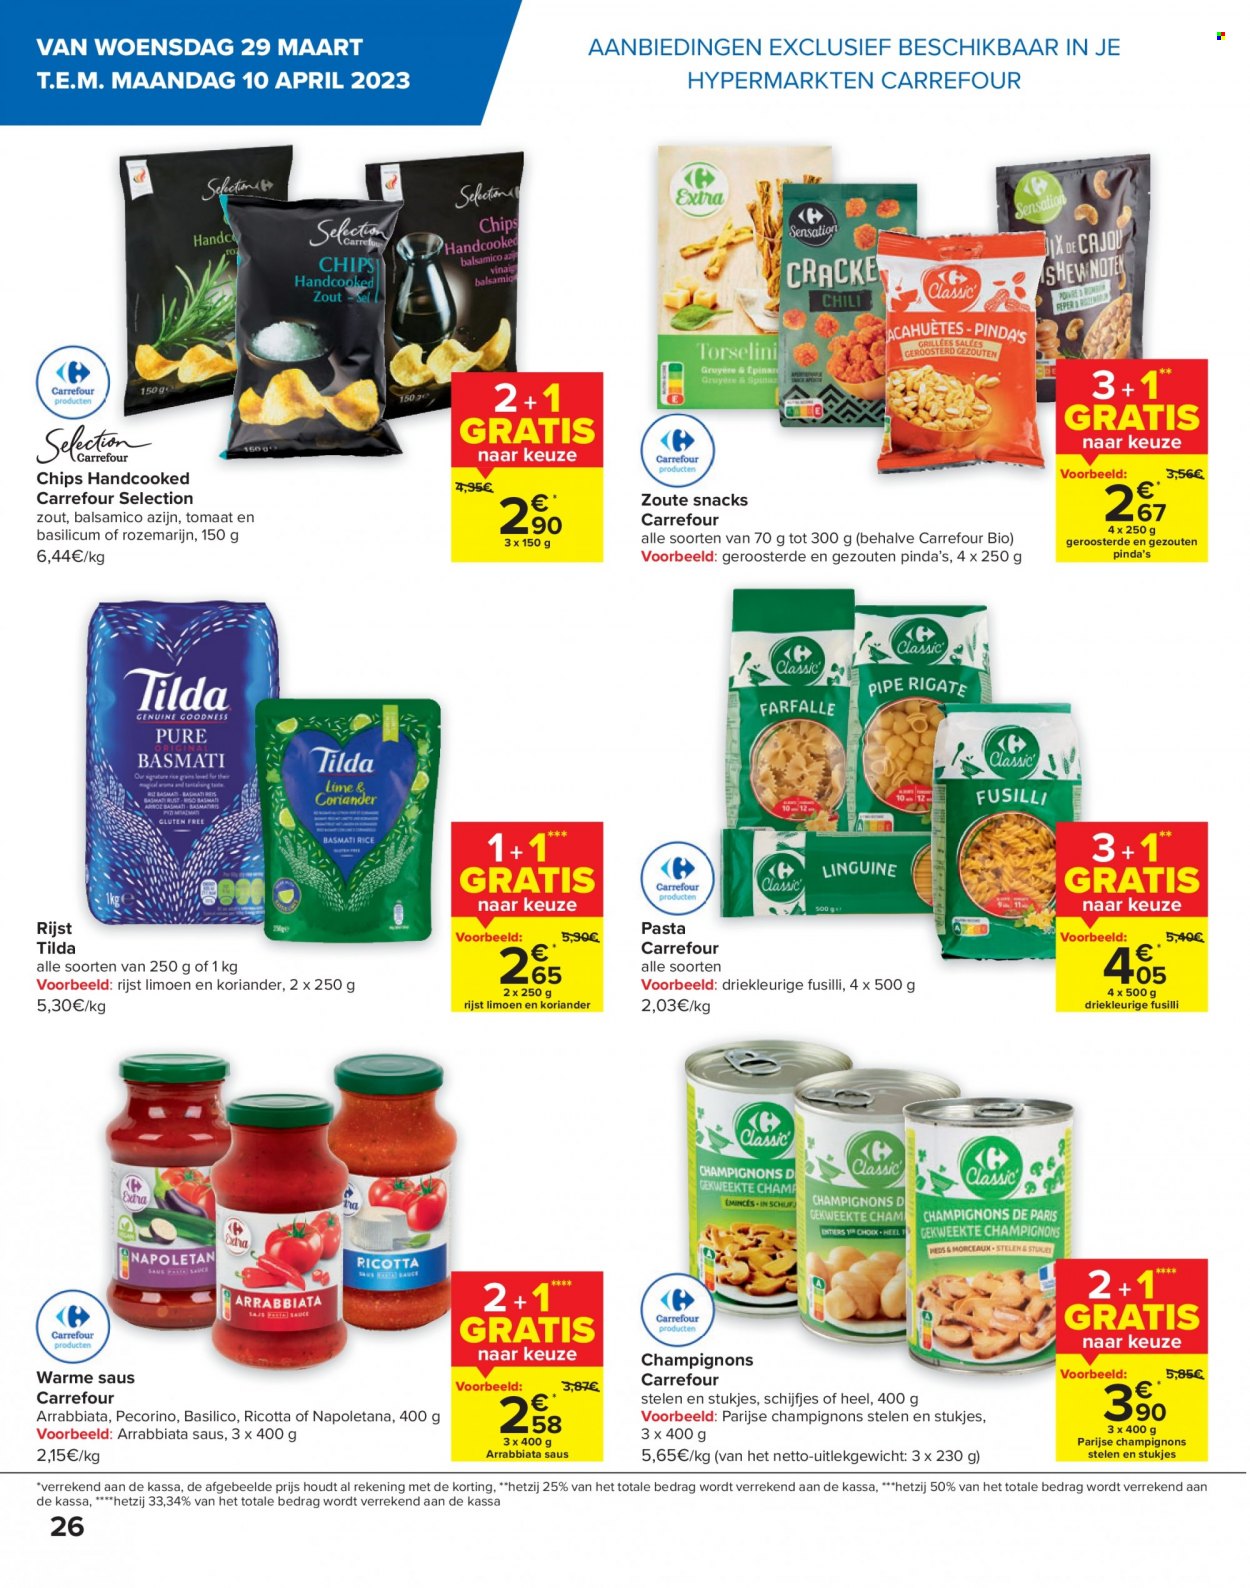 thumbnail - Carrefour hypermarkt-aanbieding - 29/03/2023 - 10/04/2023 -  producten in de aanbieding - champignons, limoen, Pecorino, ricotta, pinda's, chips, pasta, rijst, fusilli, koriander, azijn, balsamico. Pagina 26.